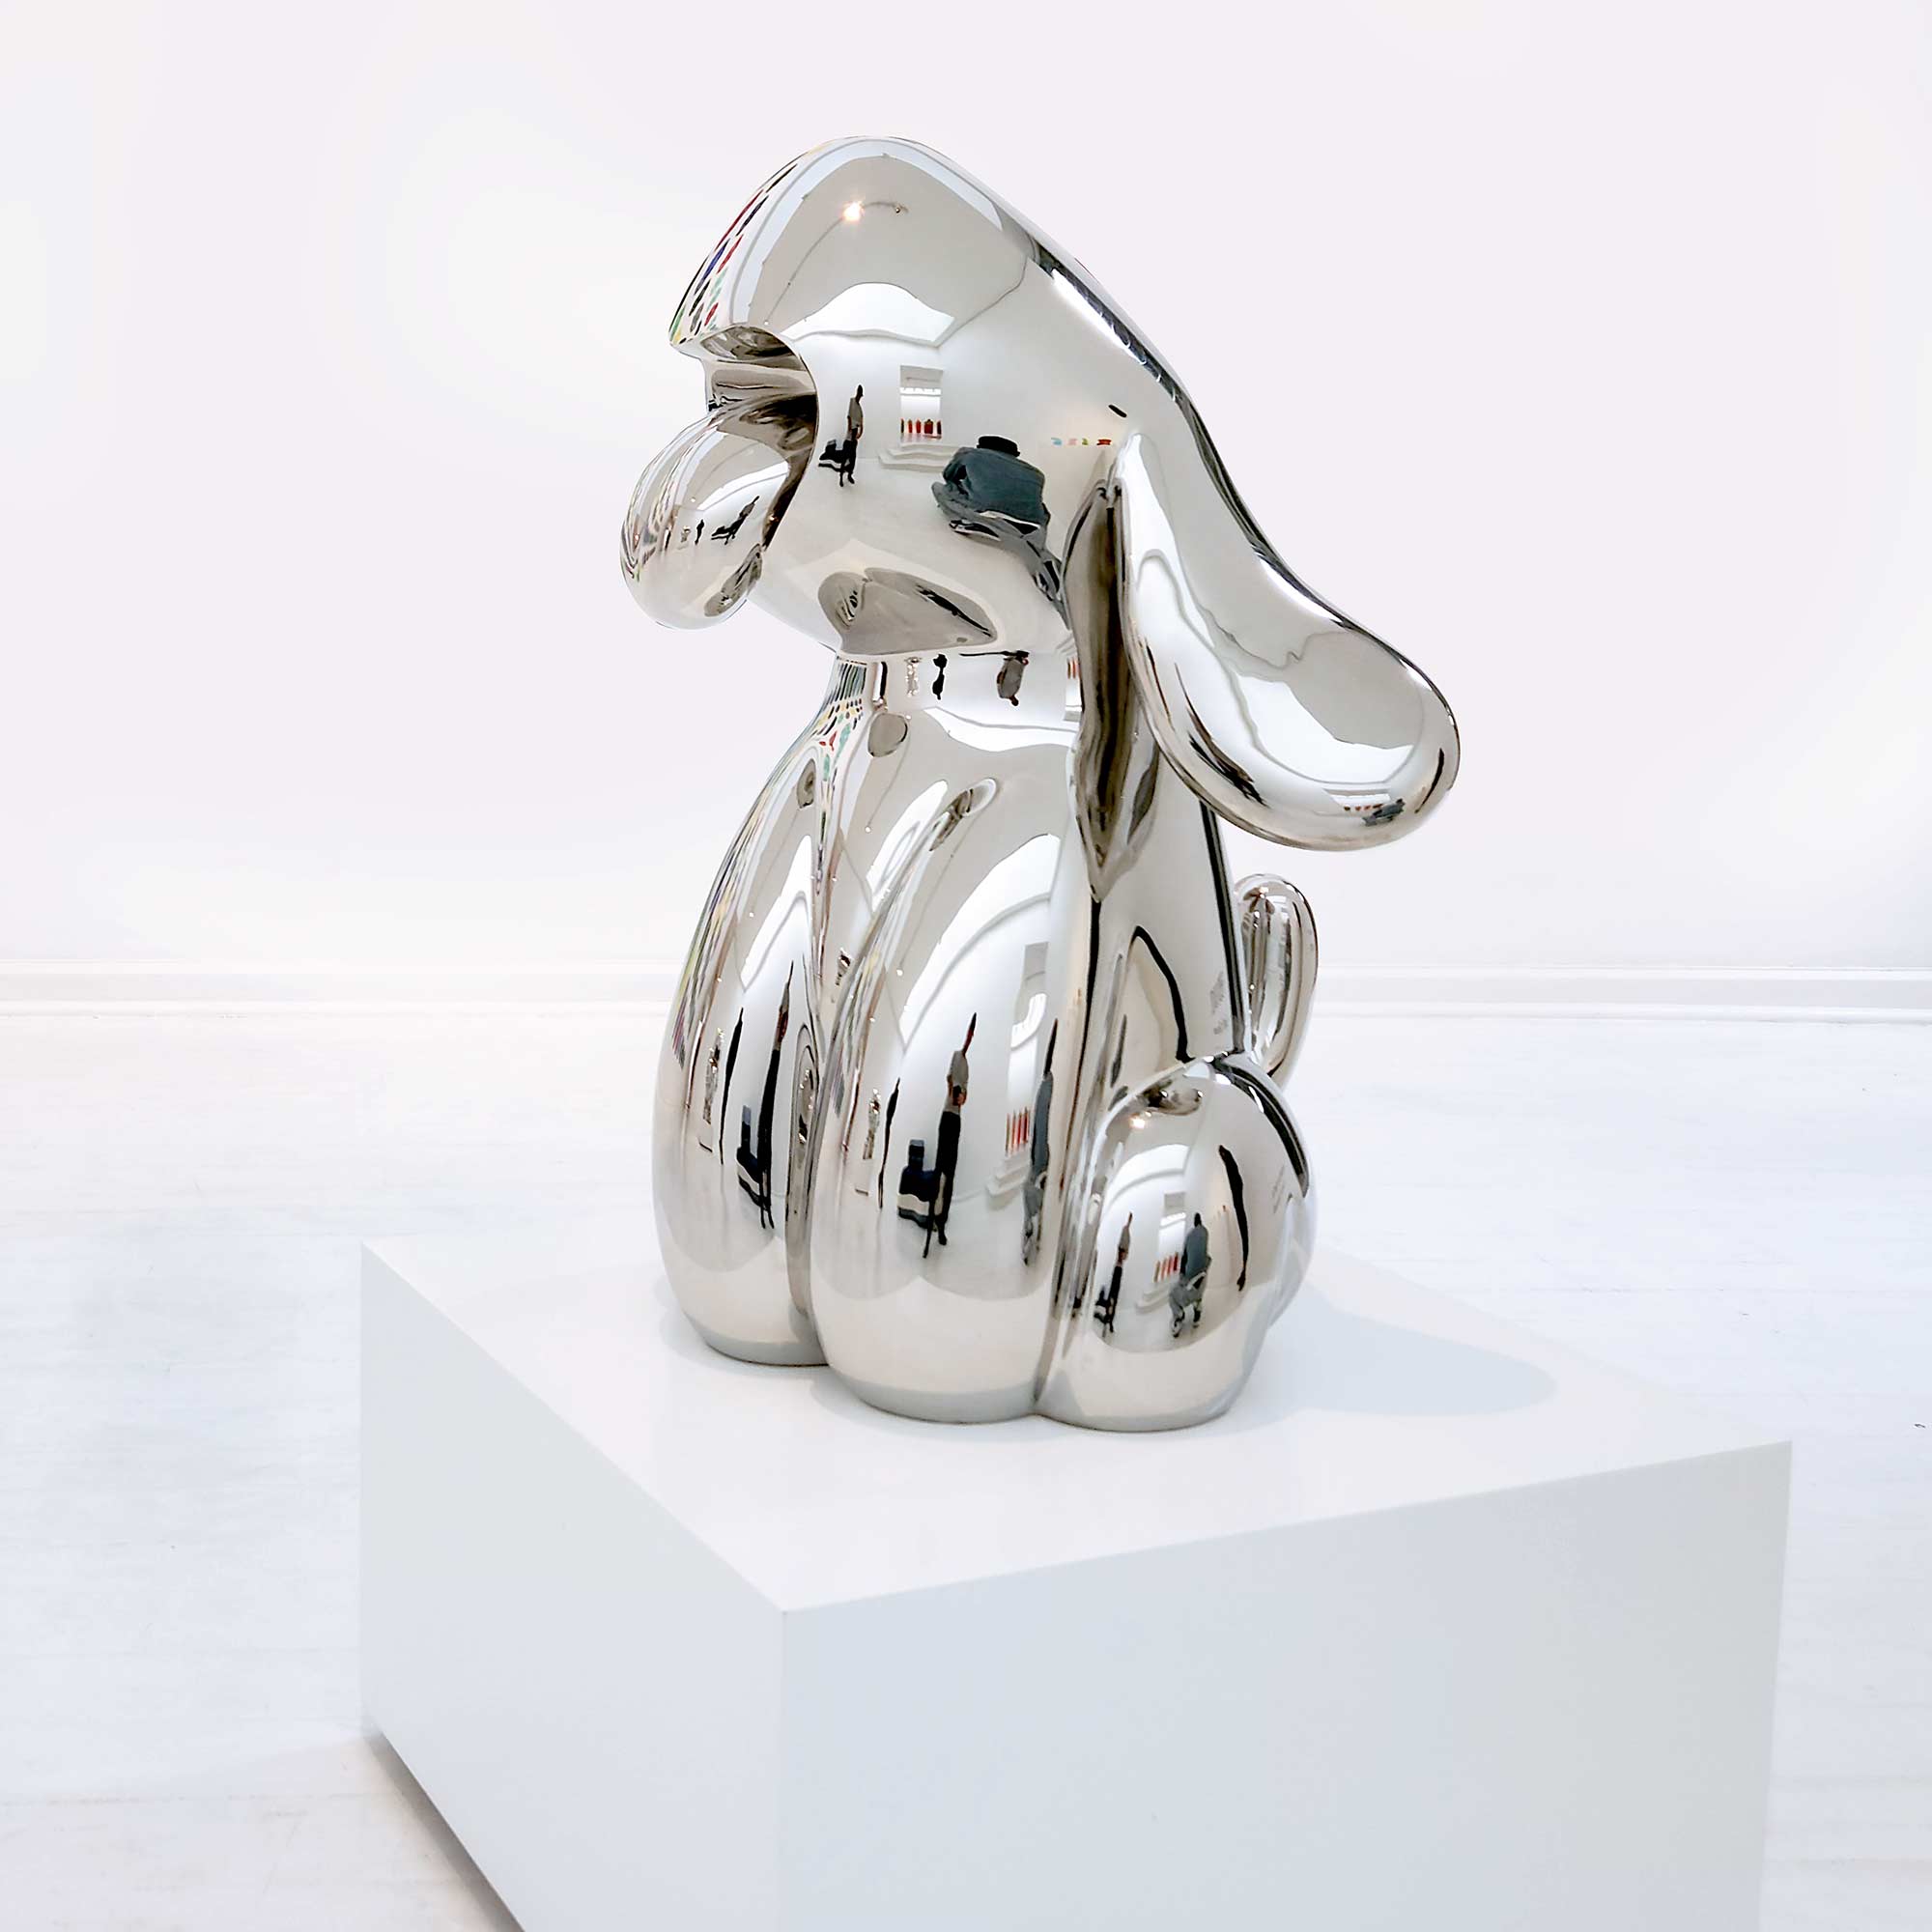 Dog Roar, Polished Stainless steel sculpture, 80 cm high by Ferdi B Dick, side view